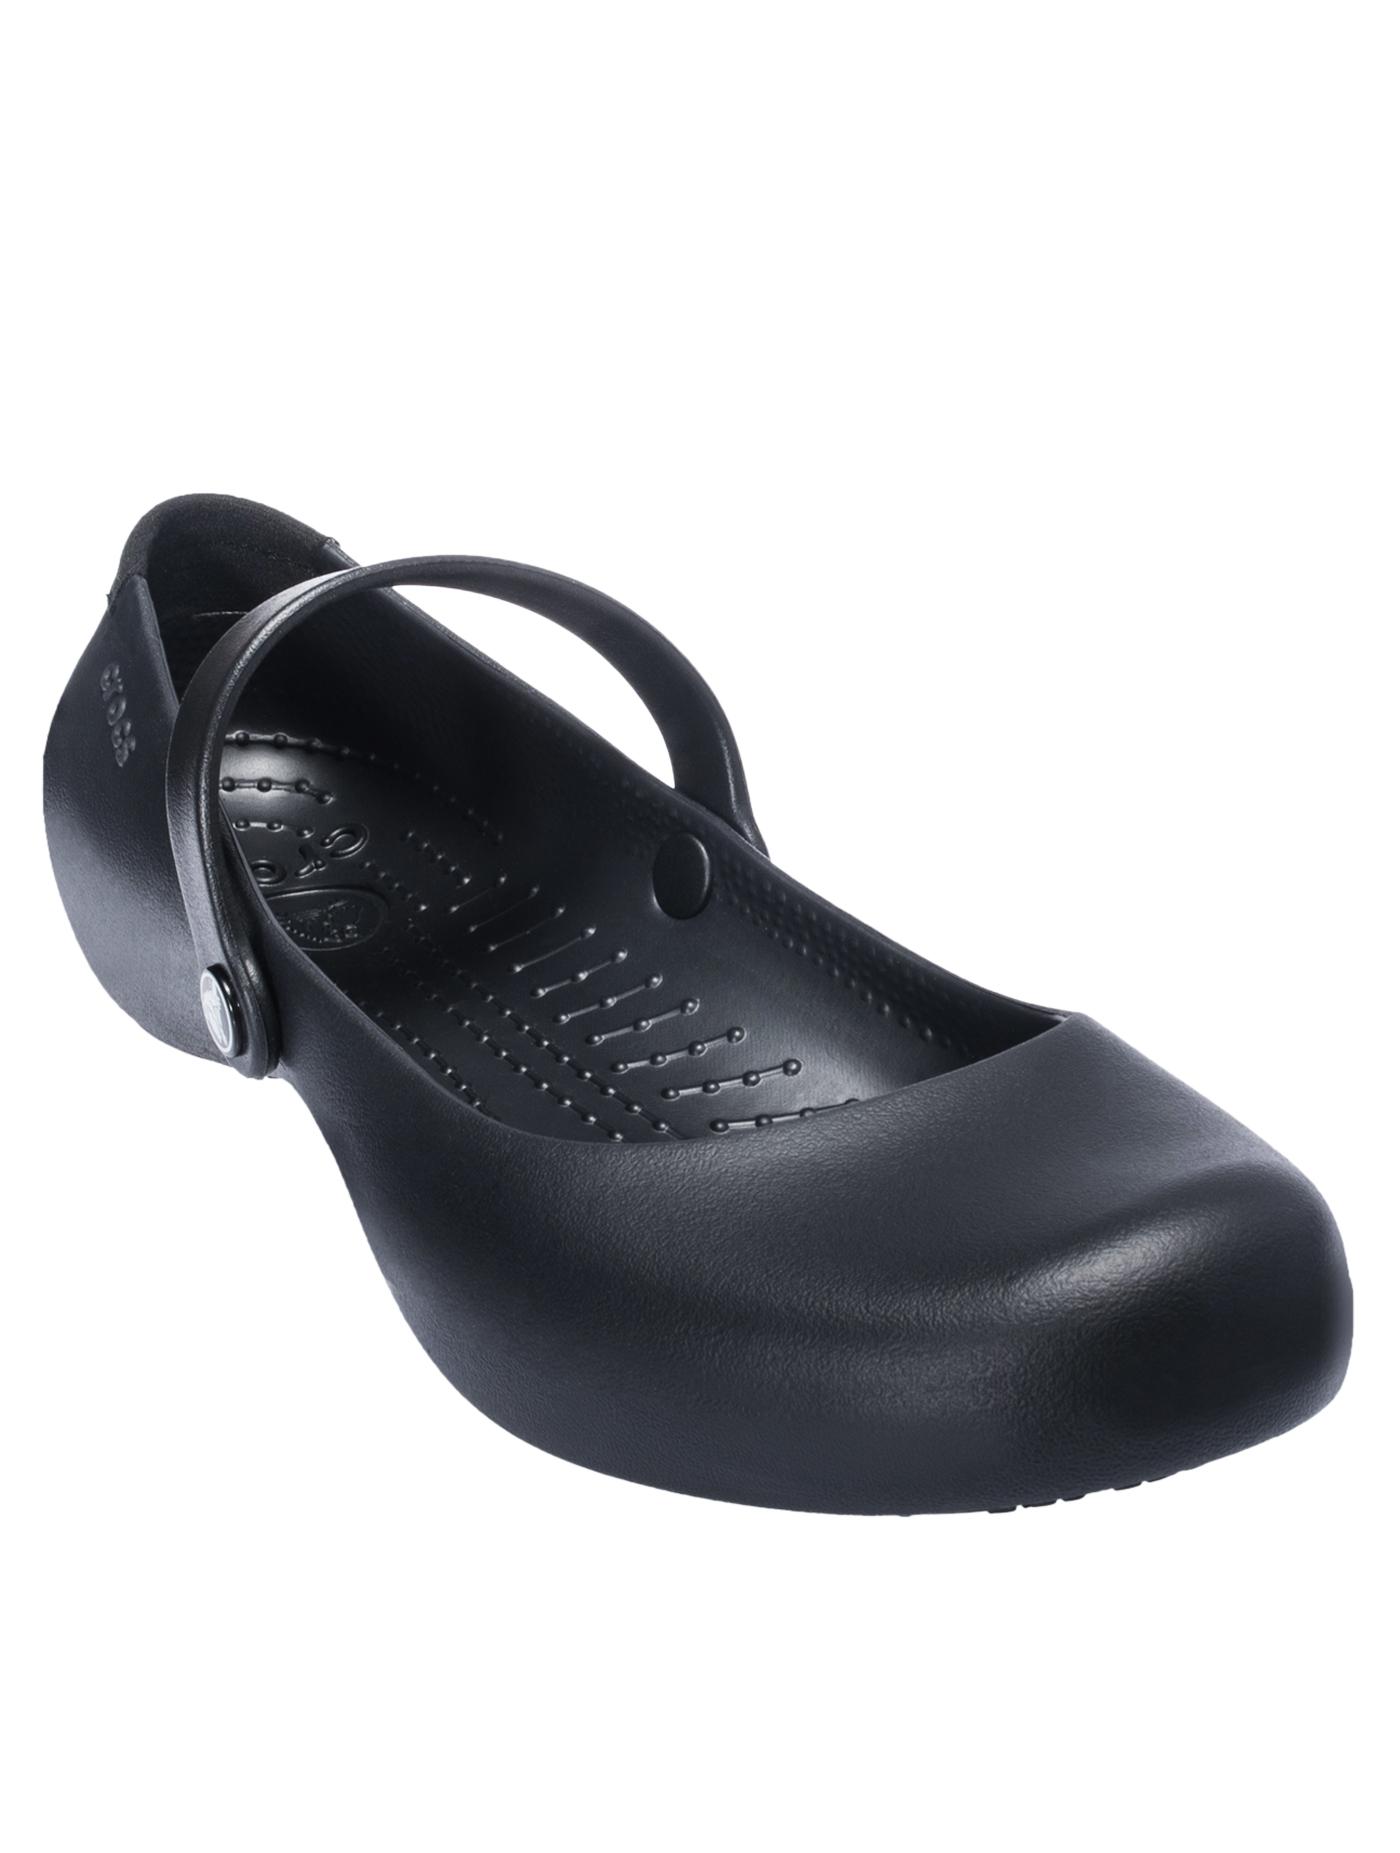 CROCS รองเท้าลำลองผู้หญิง Alice Work ไซส์ W8 สีดำ